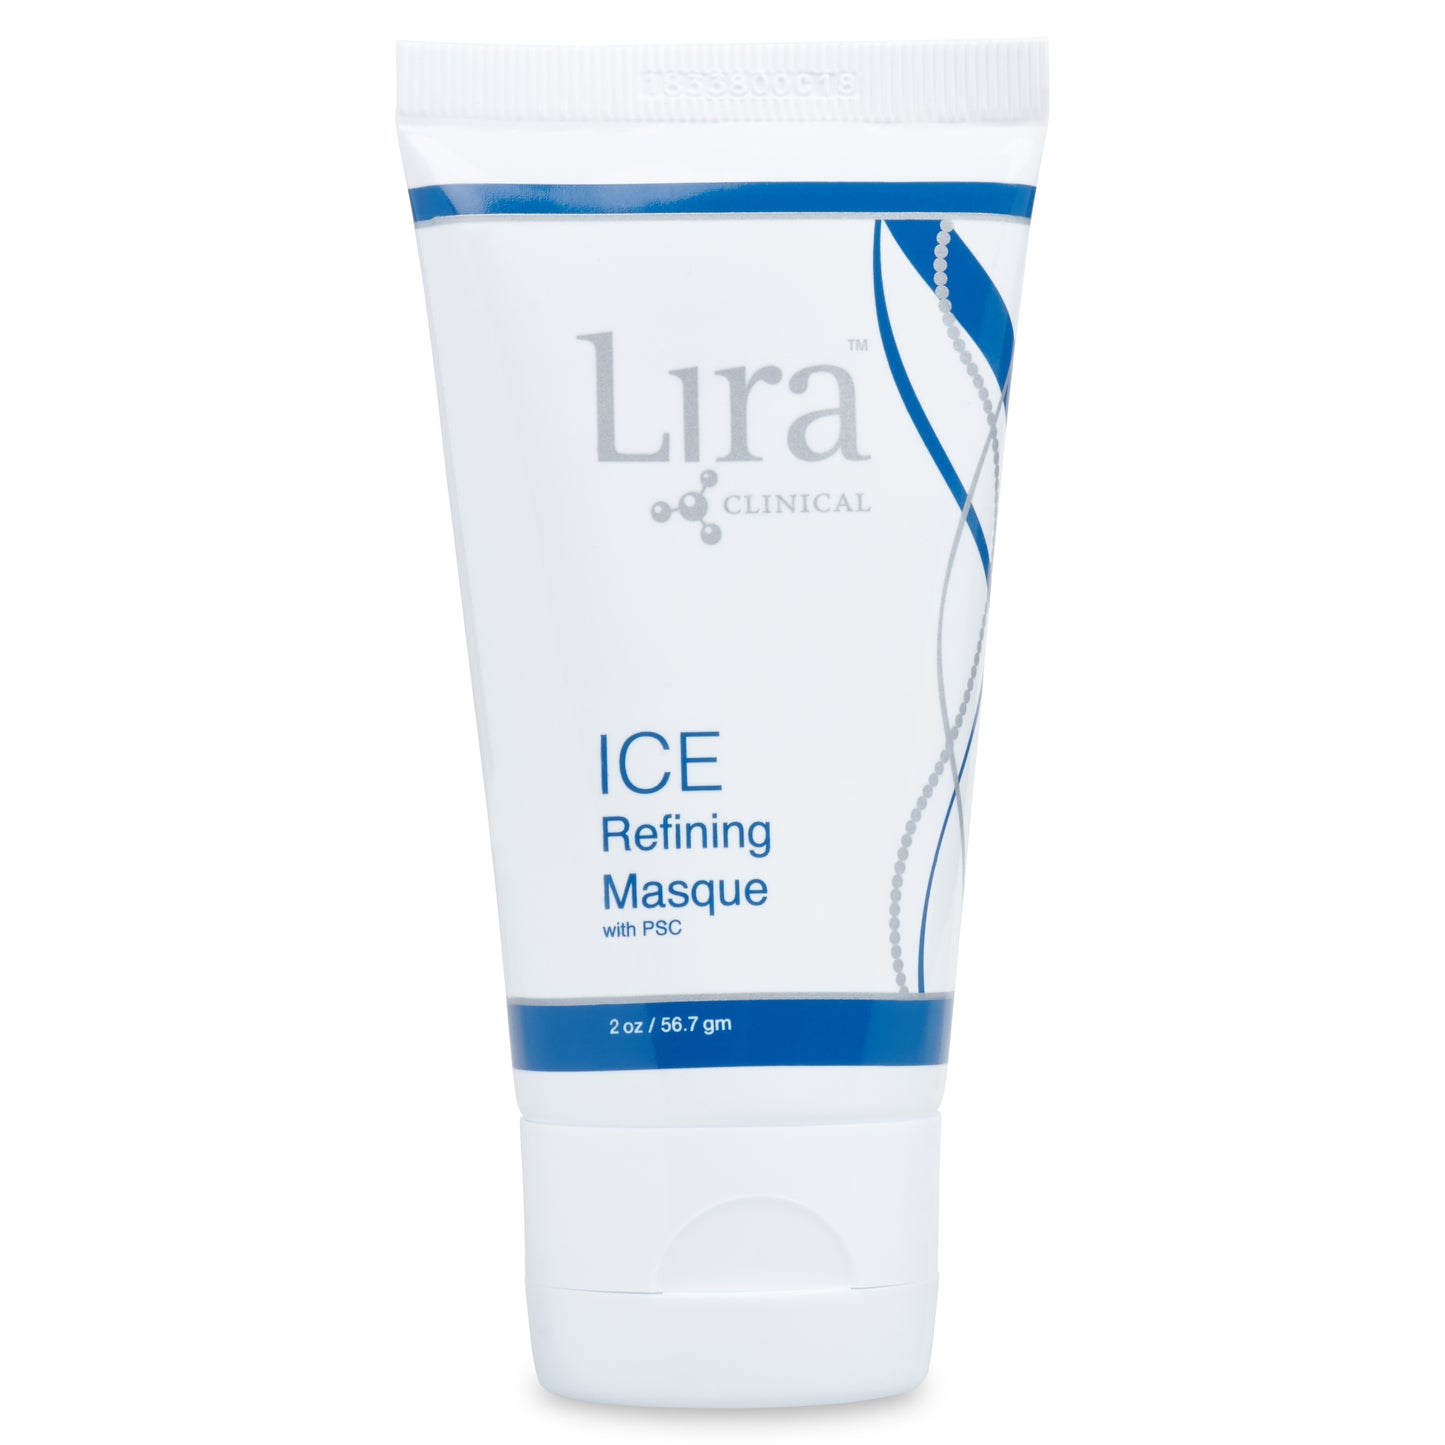 Lira ICE Refining Masque with PSC